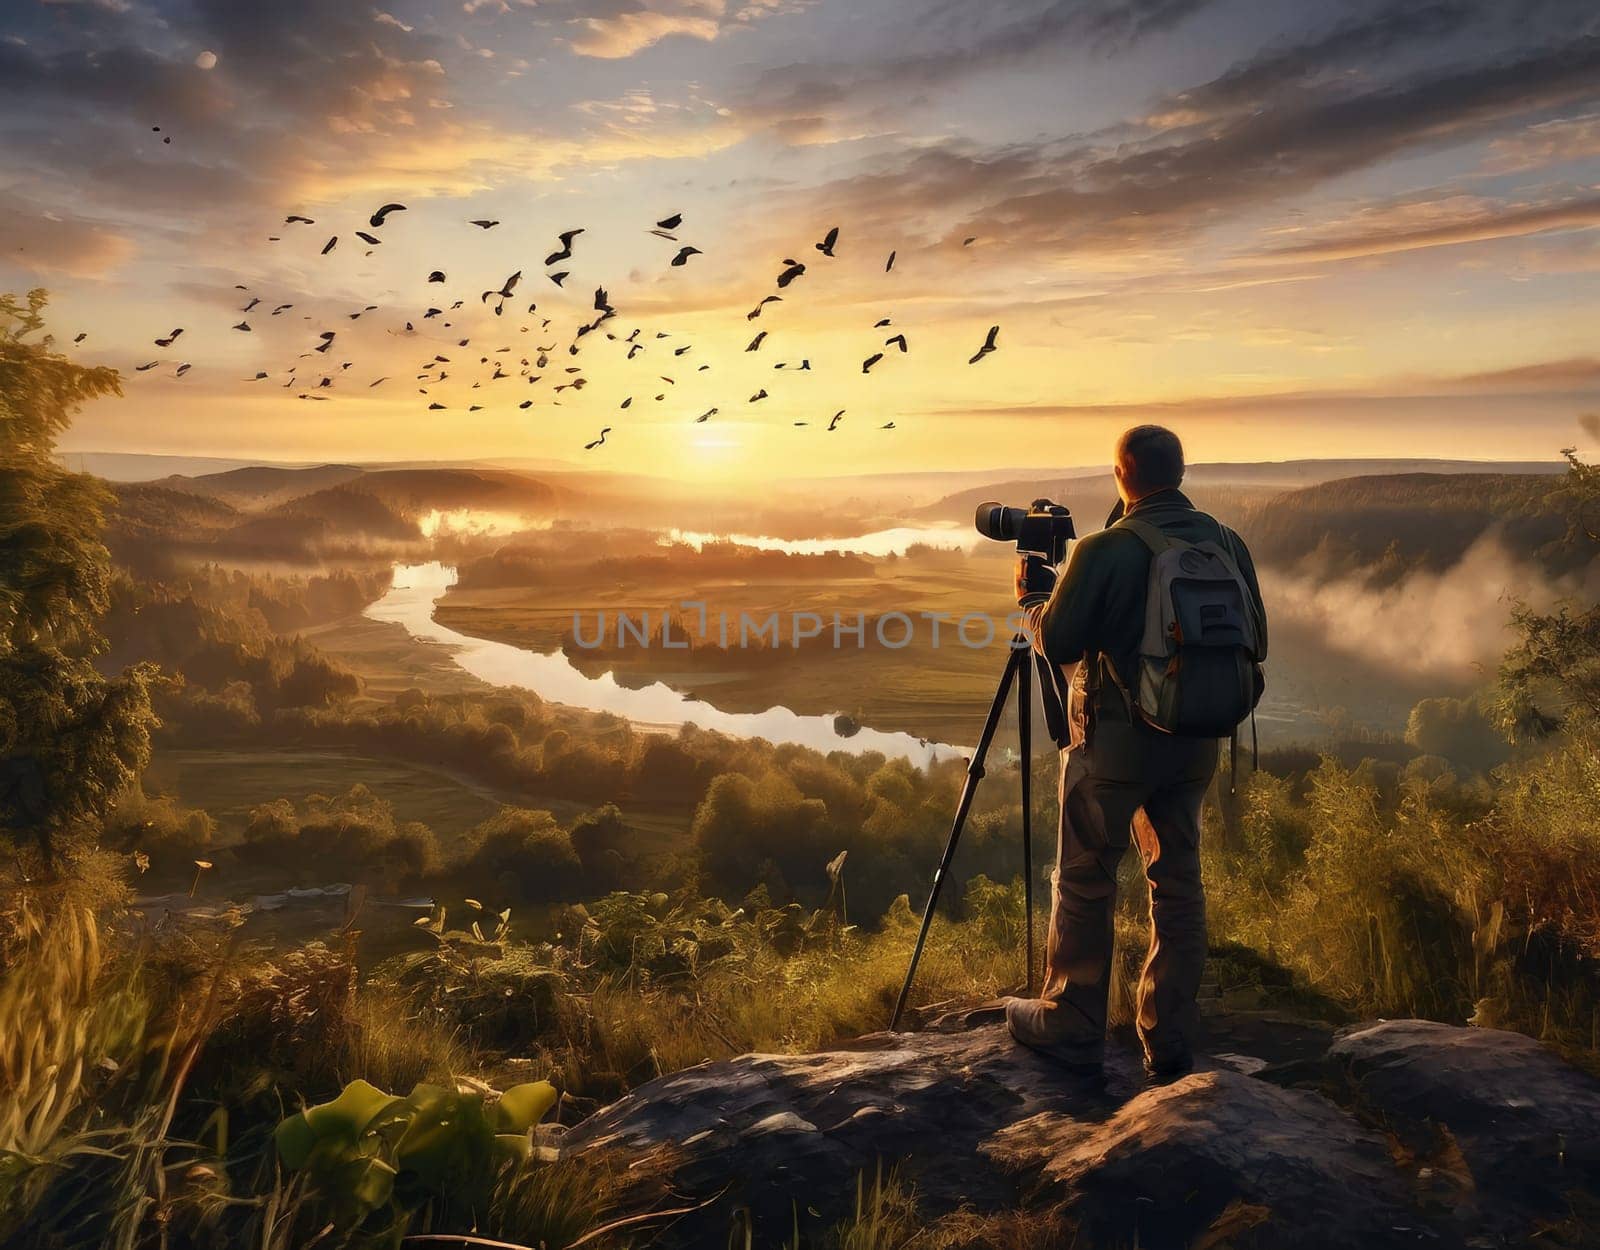 Birdwatcher shooting birds in beautiful sunlight by fascinadora